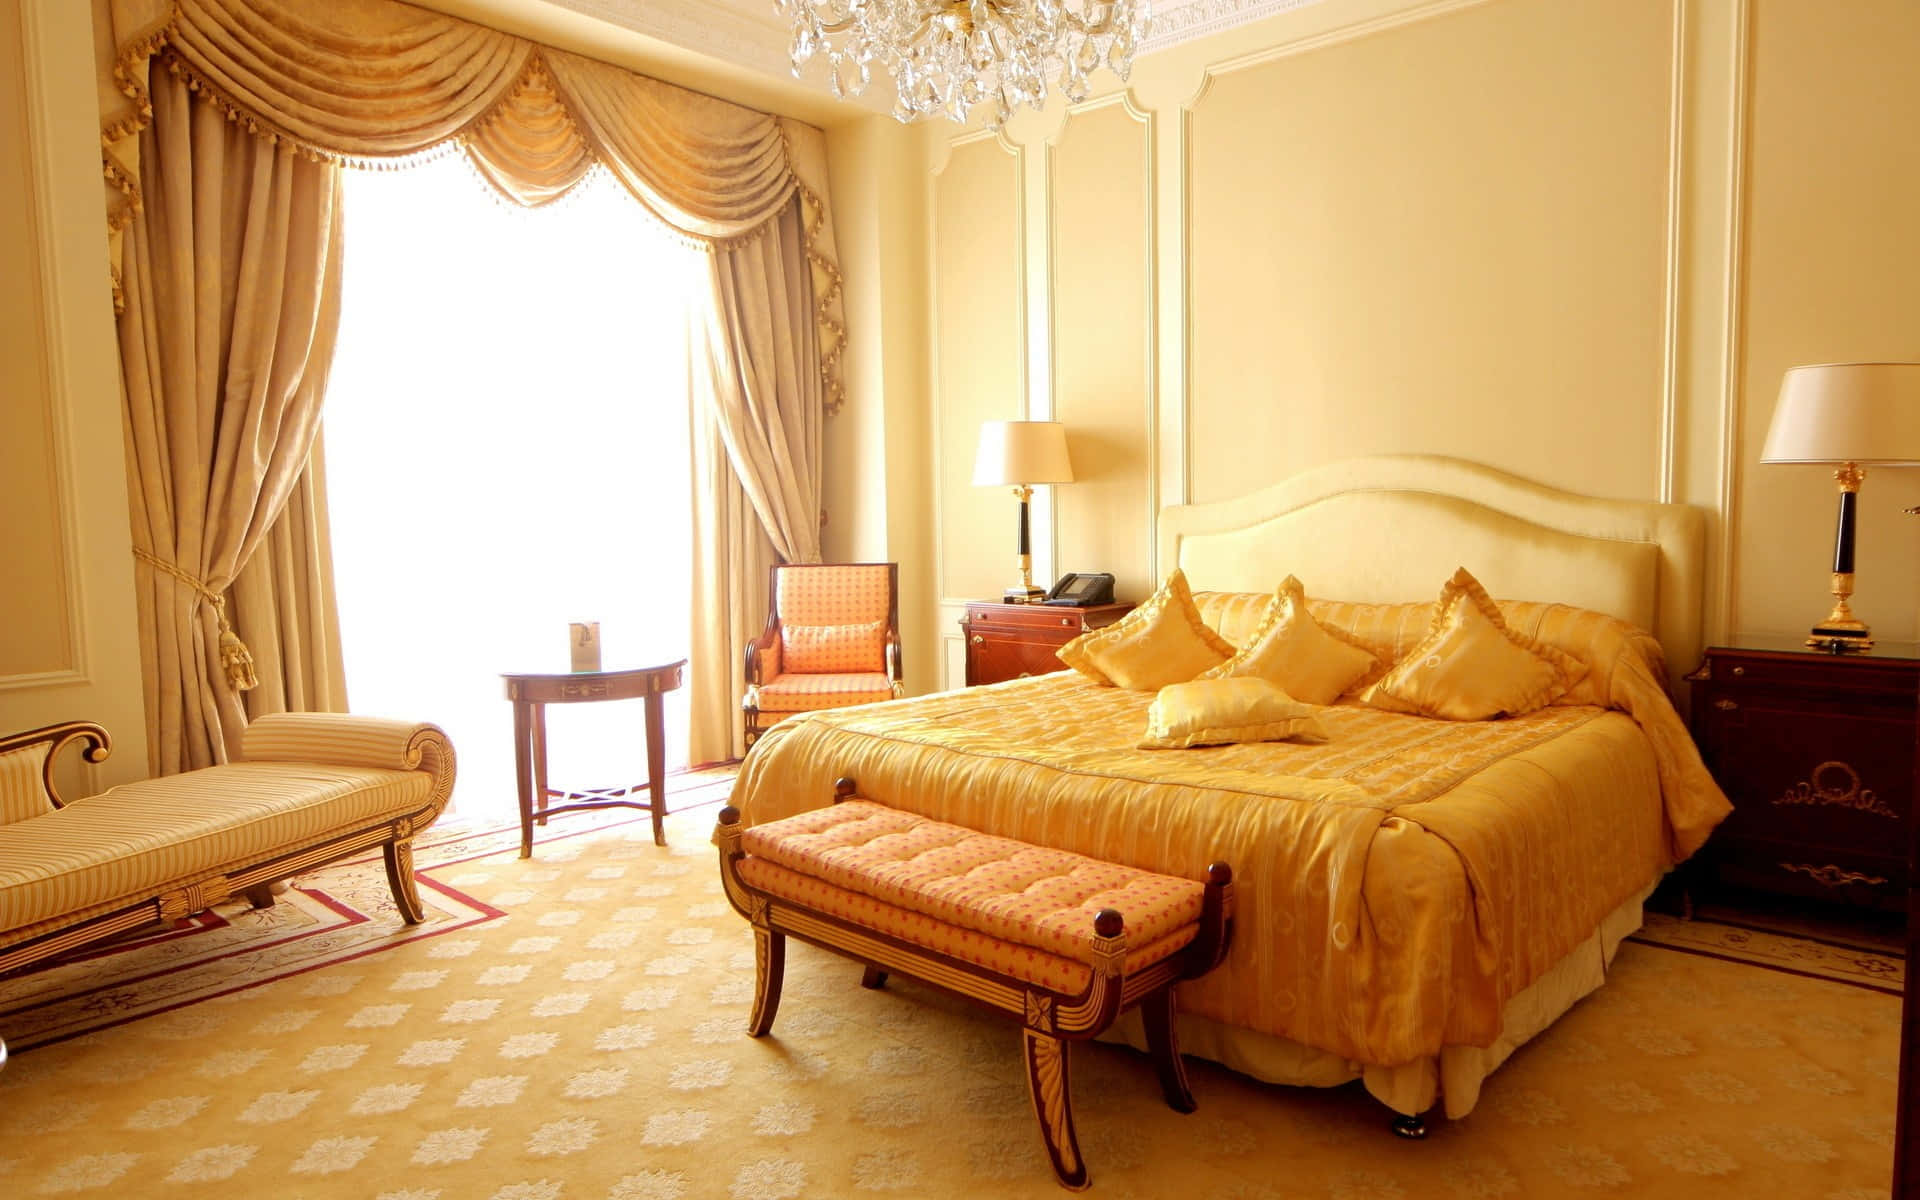 Luxurious Hotel Room Interior